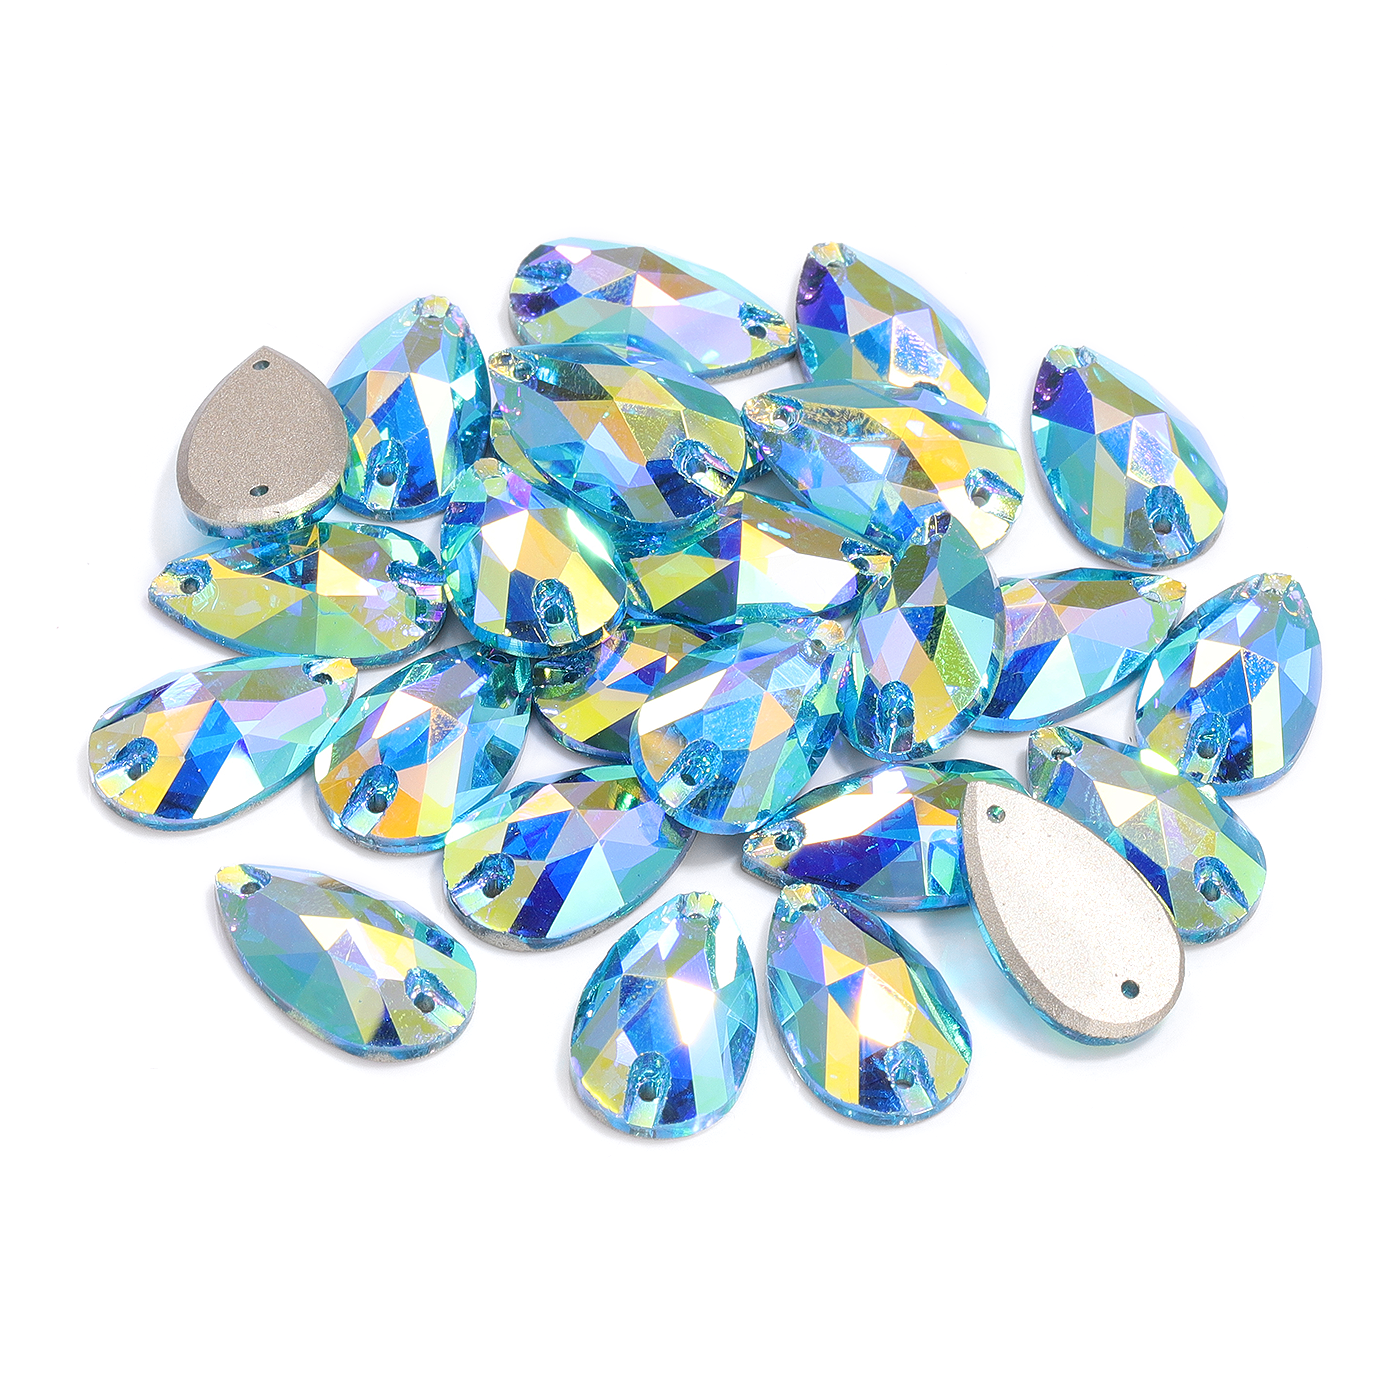 Aquamarine AB Drop Shape High Quality Glass Sew-on Rhinestones